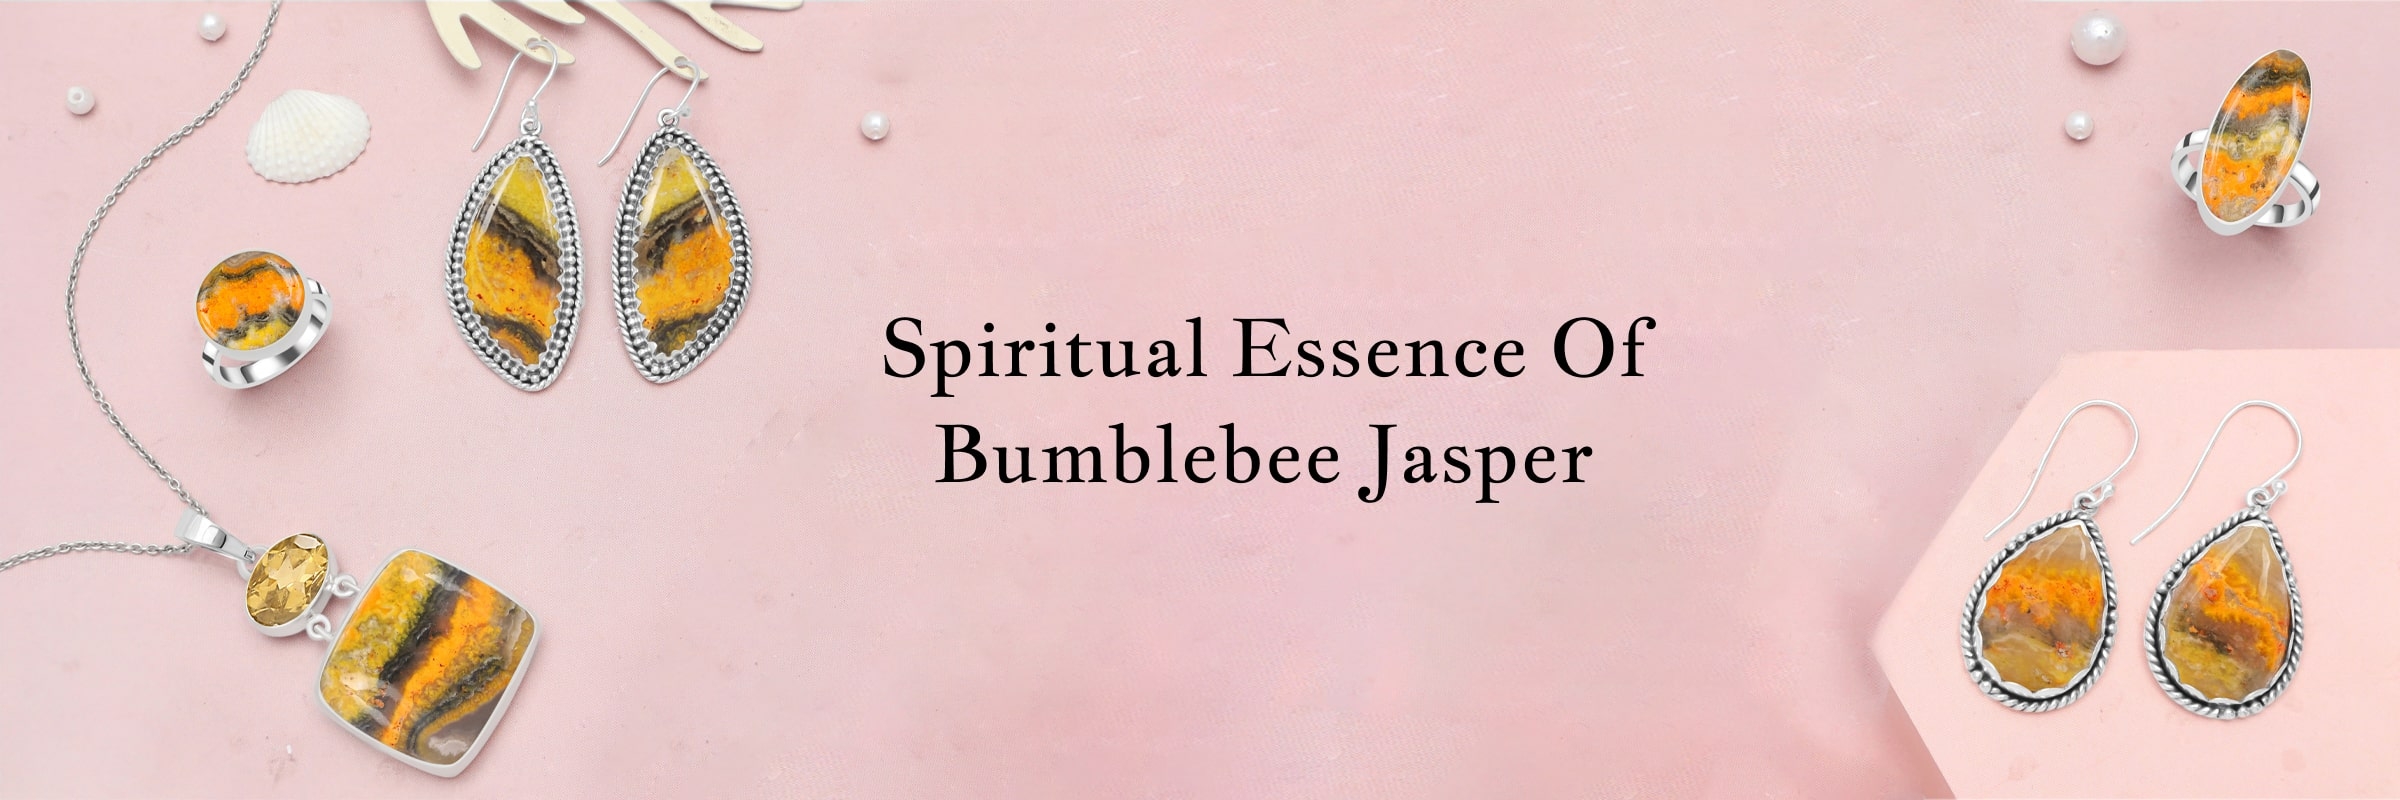 Bumblebee Jasper Spiritual Properties and Benefits